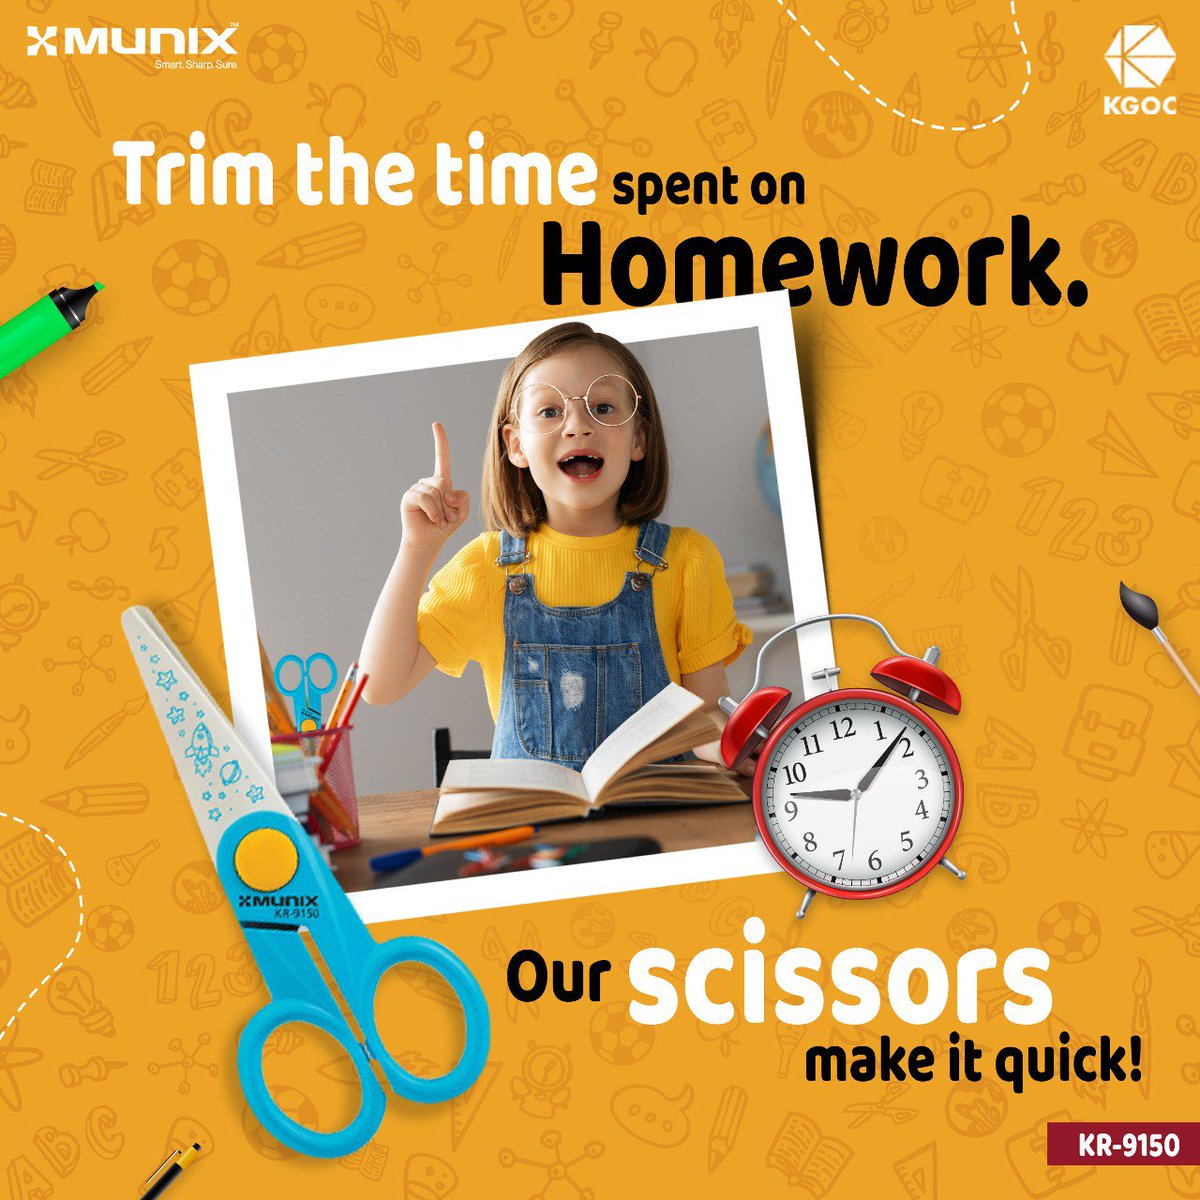 Snip away the hours! With KR-9150, homework time just got a whole lot shorter. #munix #kgoc